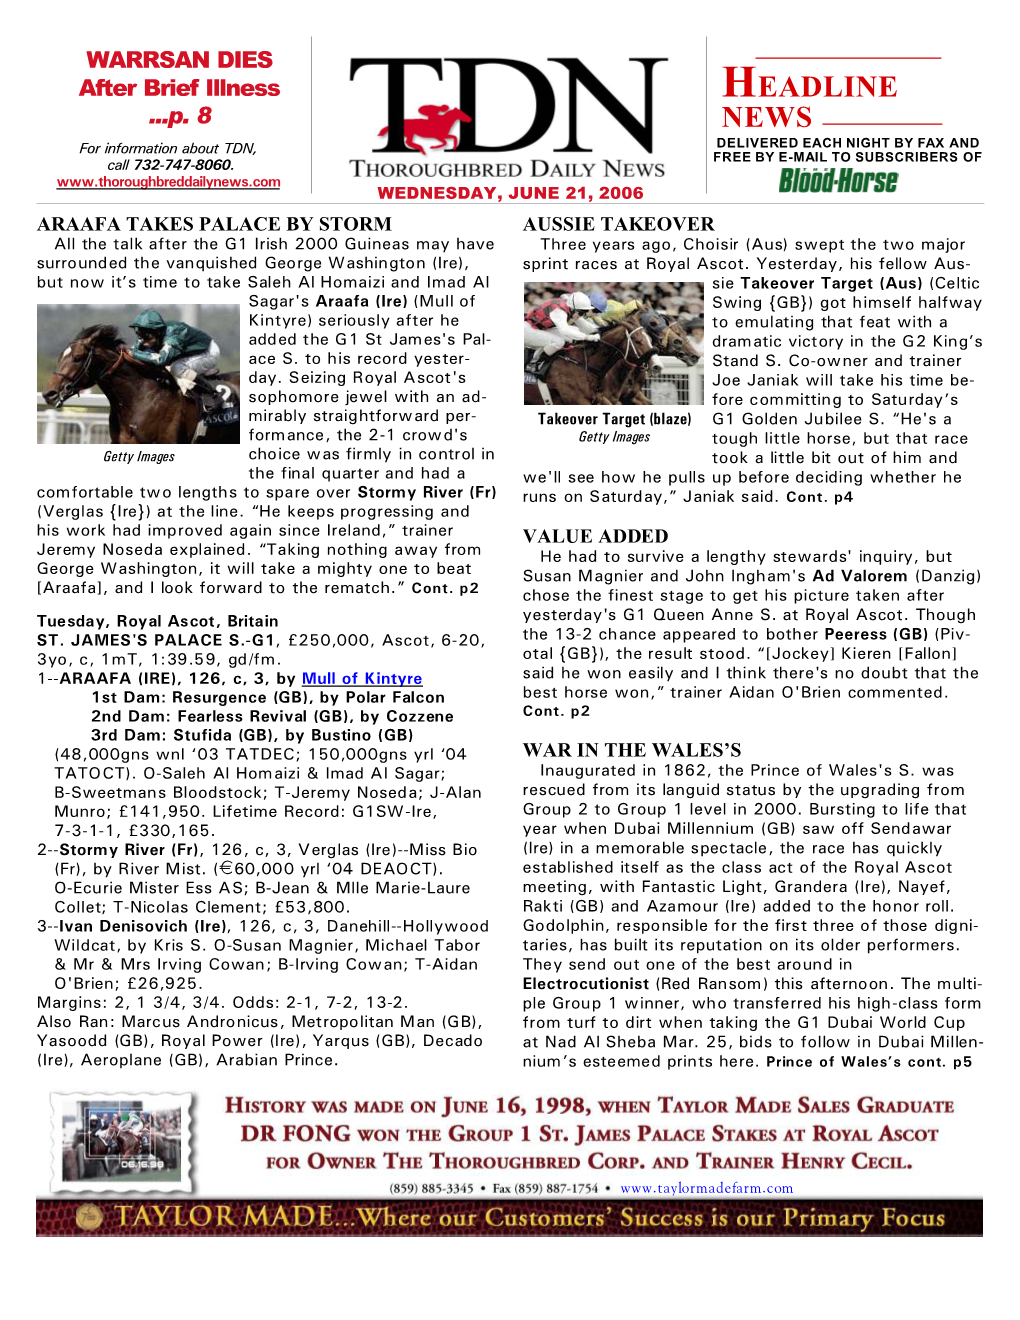 HEADLINE NEWS • 6/21/06 • PAGE 2 of 9